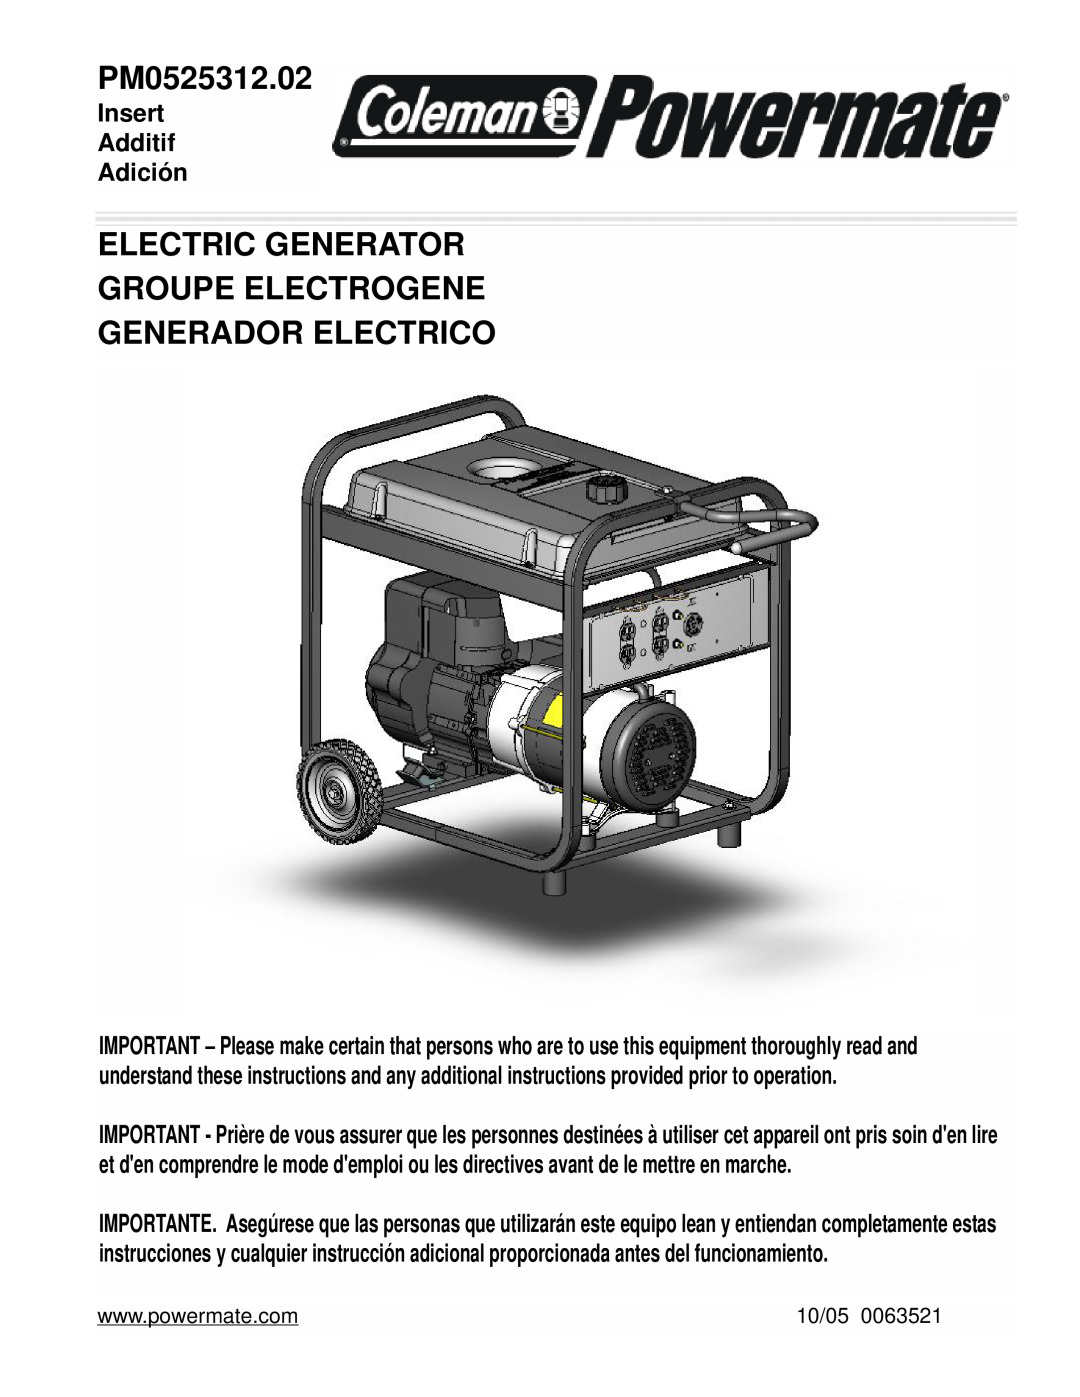 Powermate PM0525312.02 manual Electric Generator Groupe Electrogene, Generador Electrico, Insert Additif Adición, 10/05 